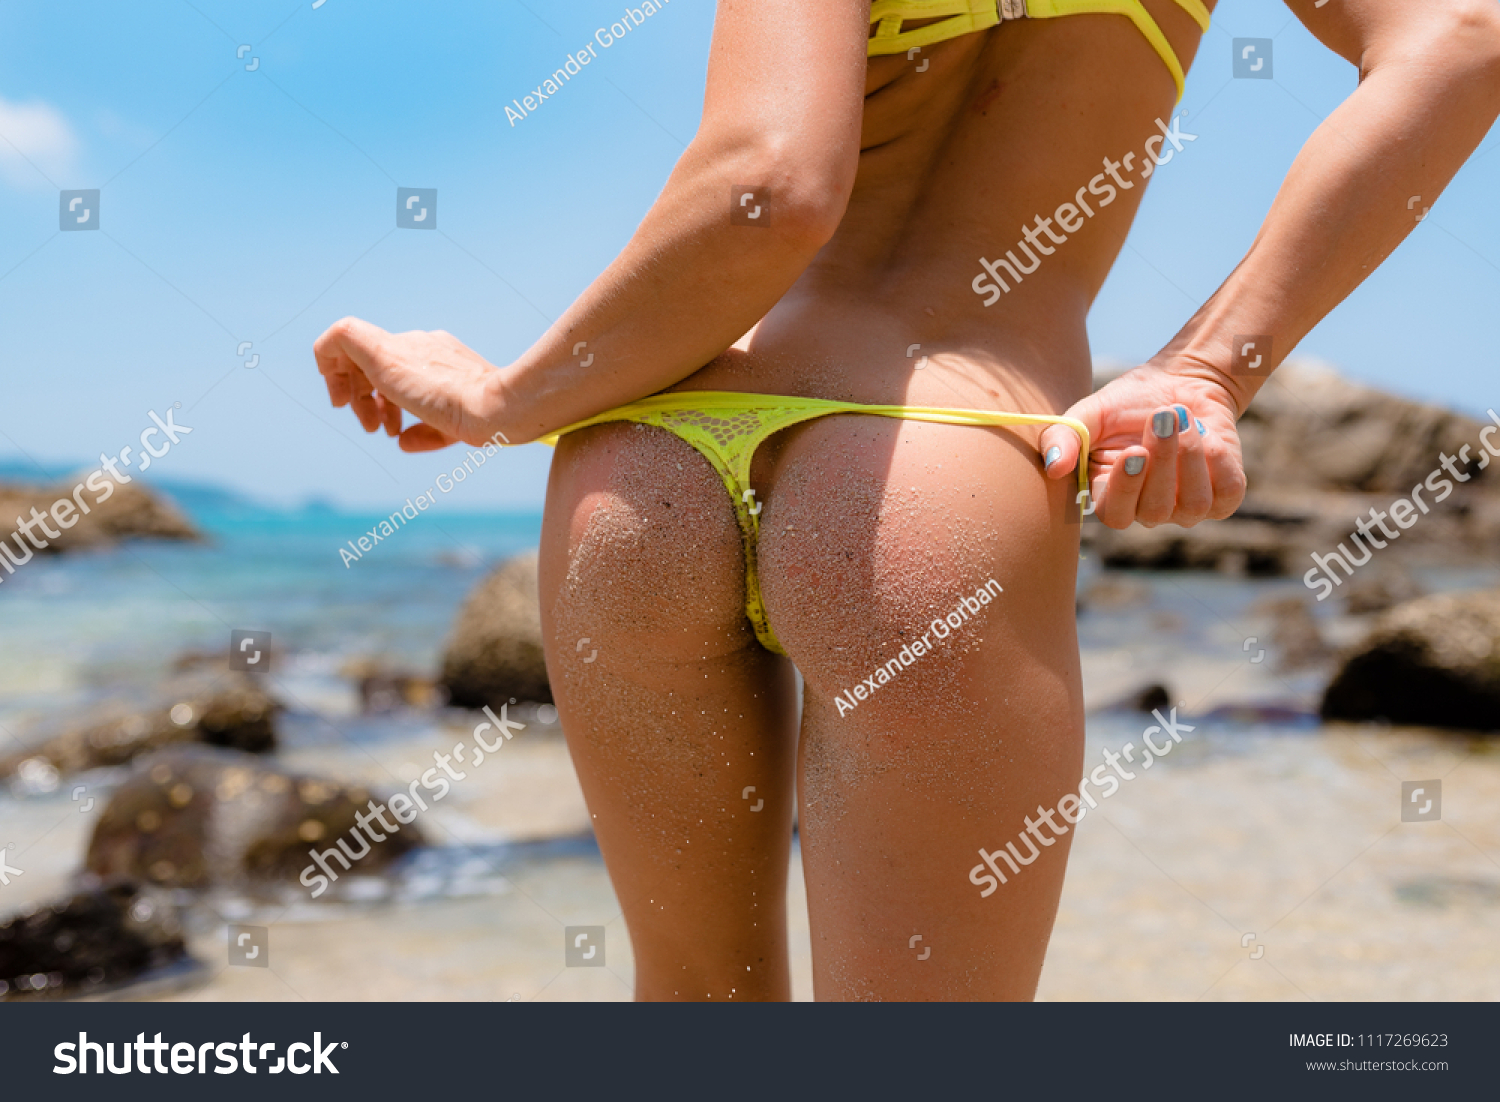 andy kreuziger recommends Hot Ass In Bikini